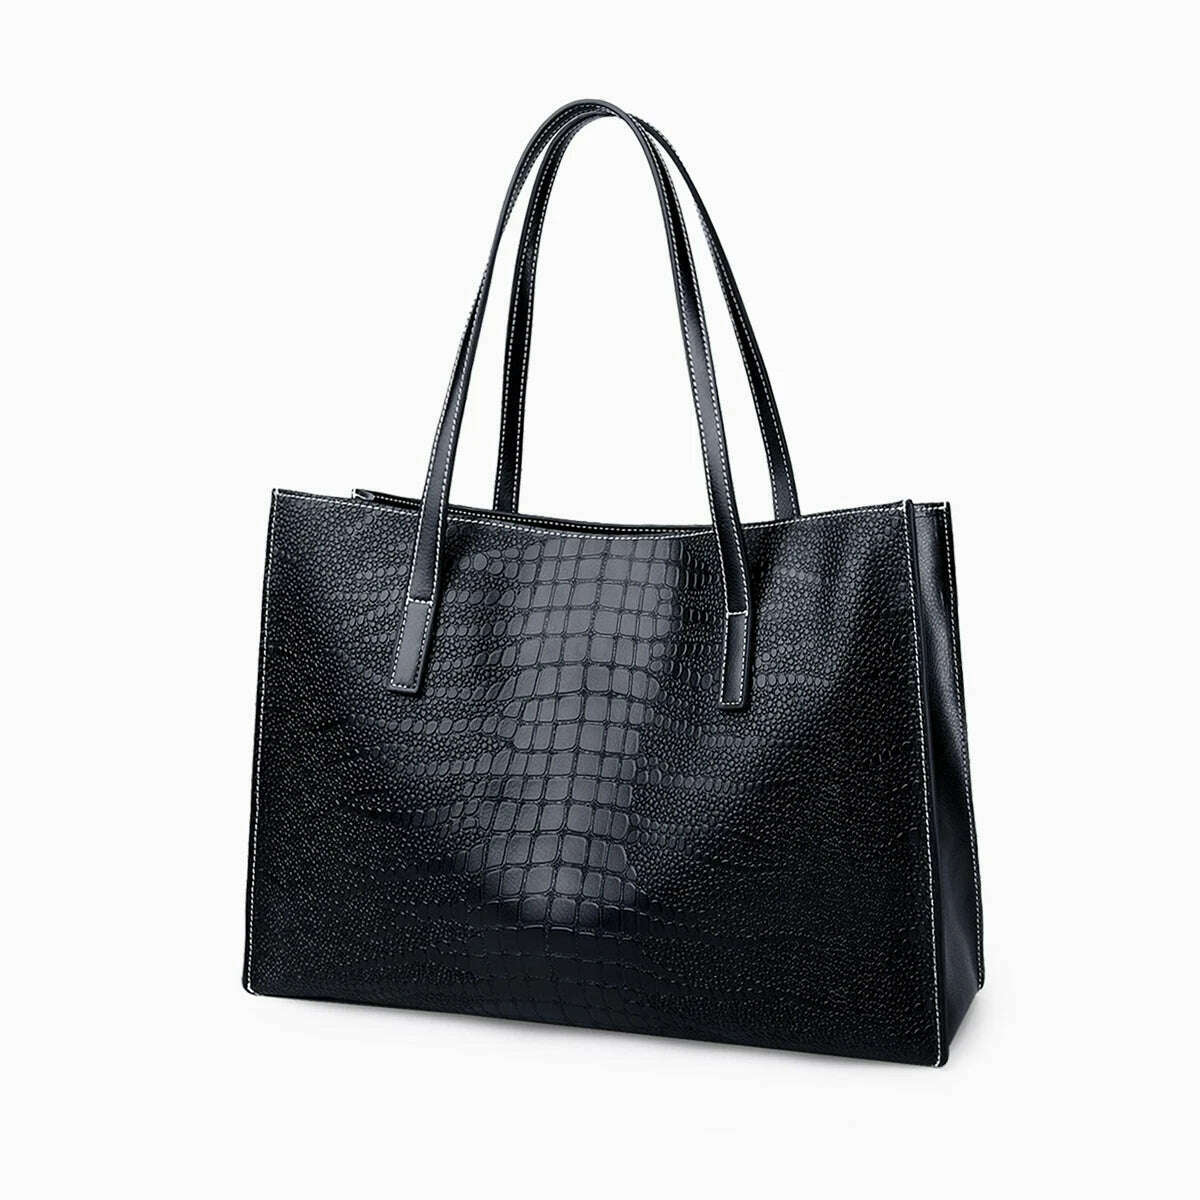 KIMLUD, ZOOLER New Full 100% Genuine Leather Women Shoulder Bag First Layer Skin Tote Original Large Handbag Travel Big Female Business#, KIMLUD Womens Clothes